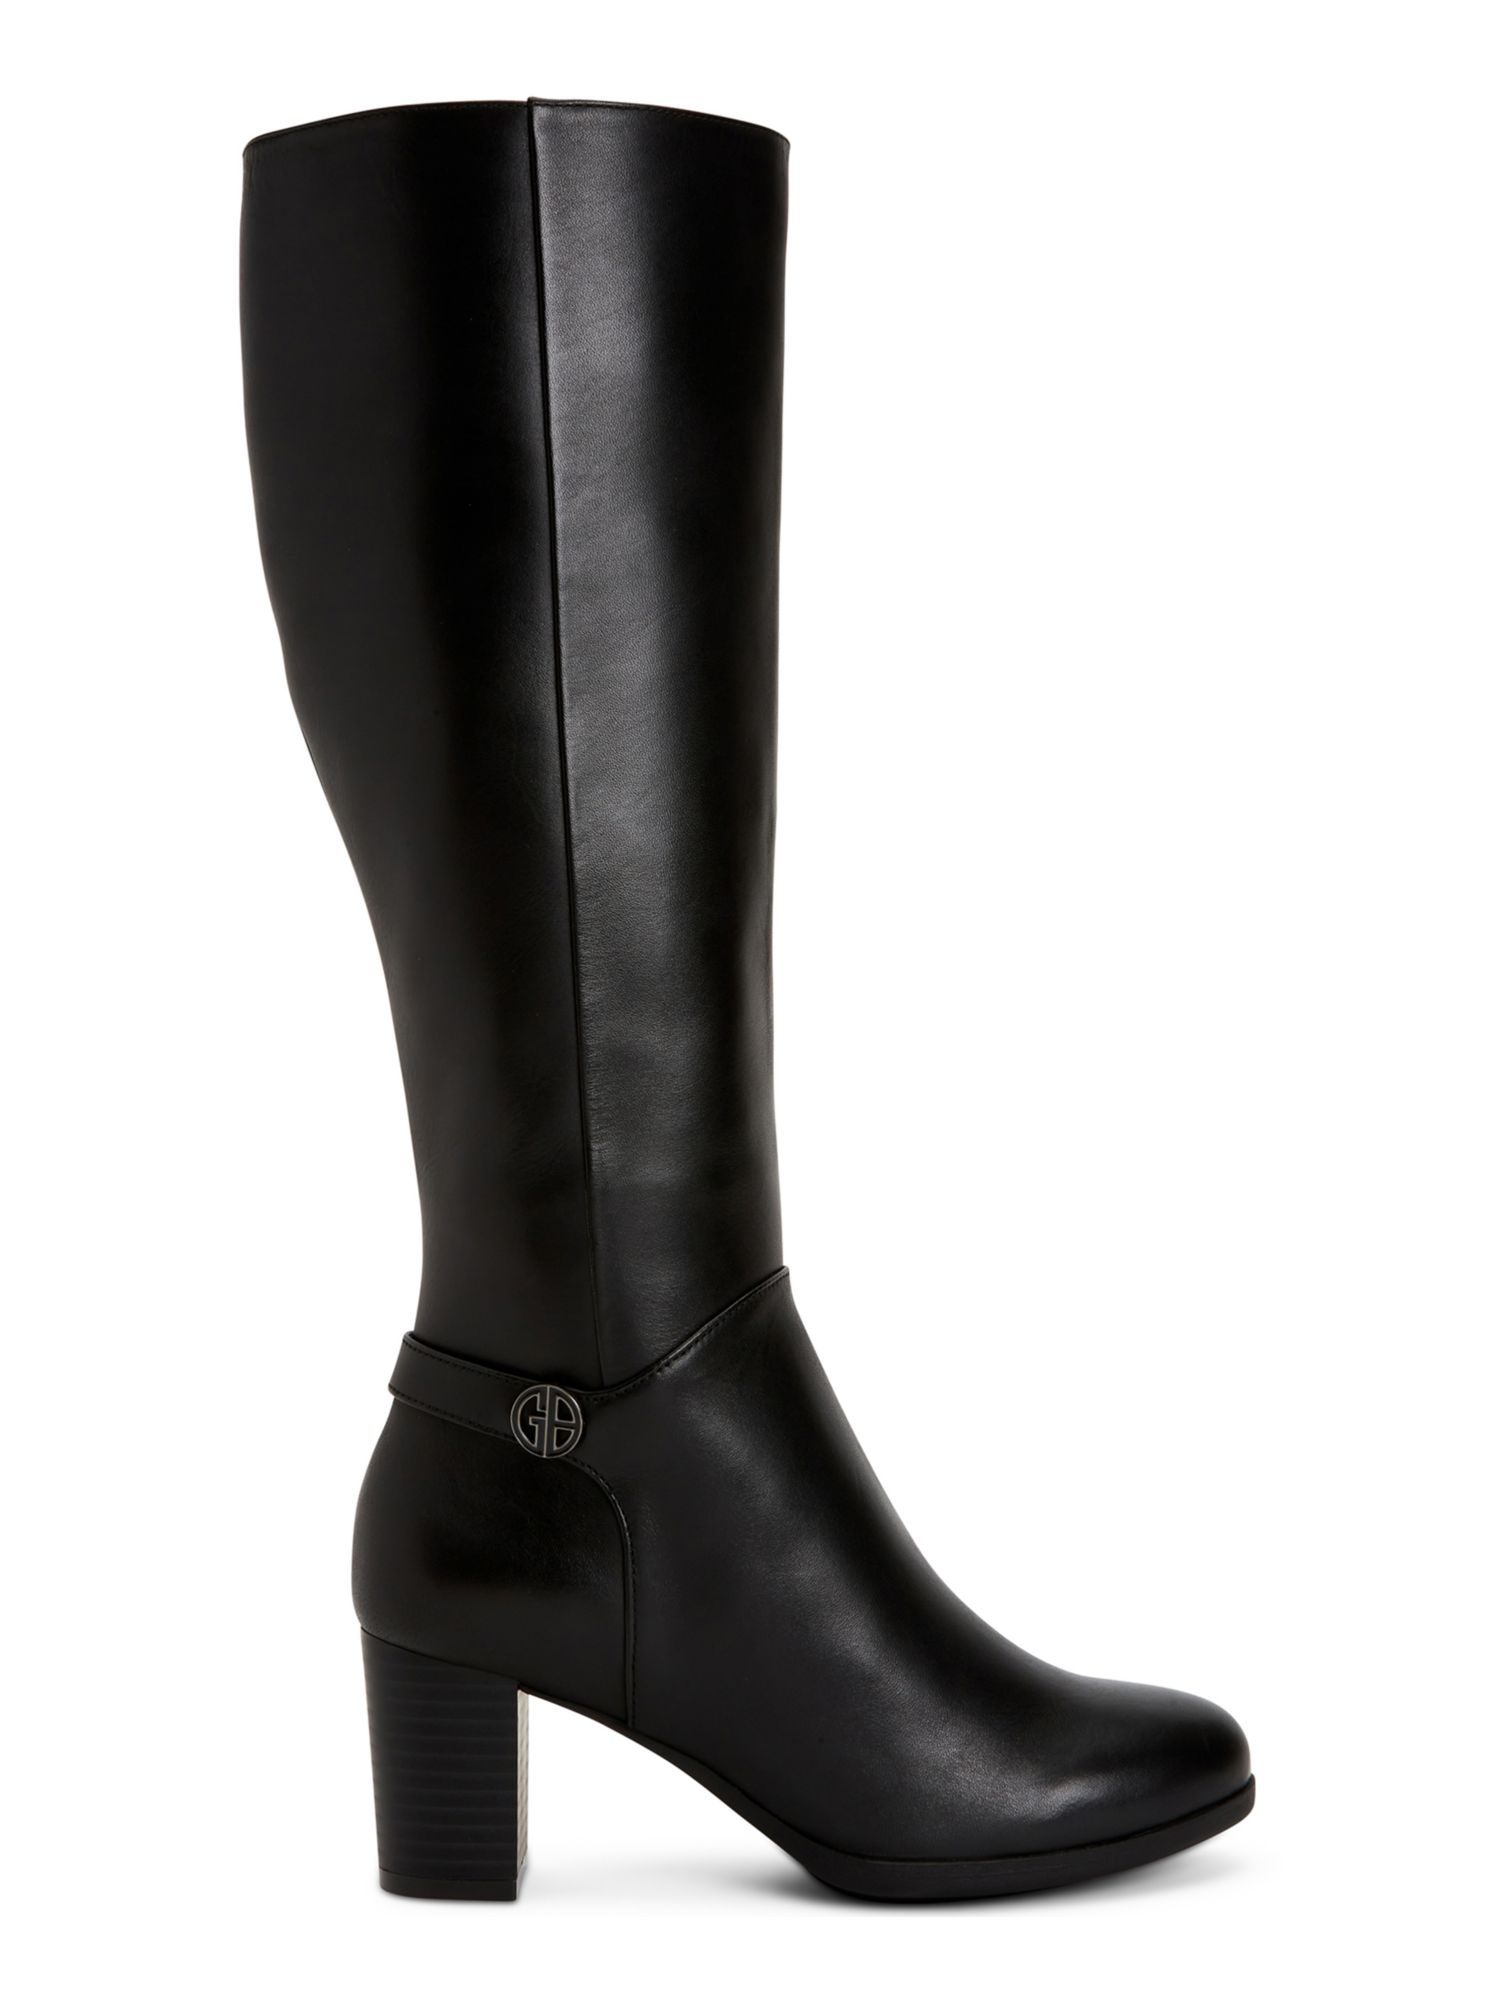 GIANI BERNINI Womens Black Slip Resistant Comfort Adonnys Round Toe Block Heel Zip-Up Leather Dress Boots 5 M